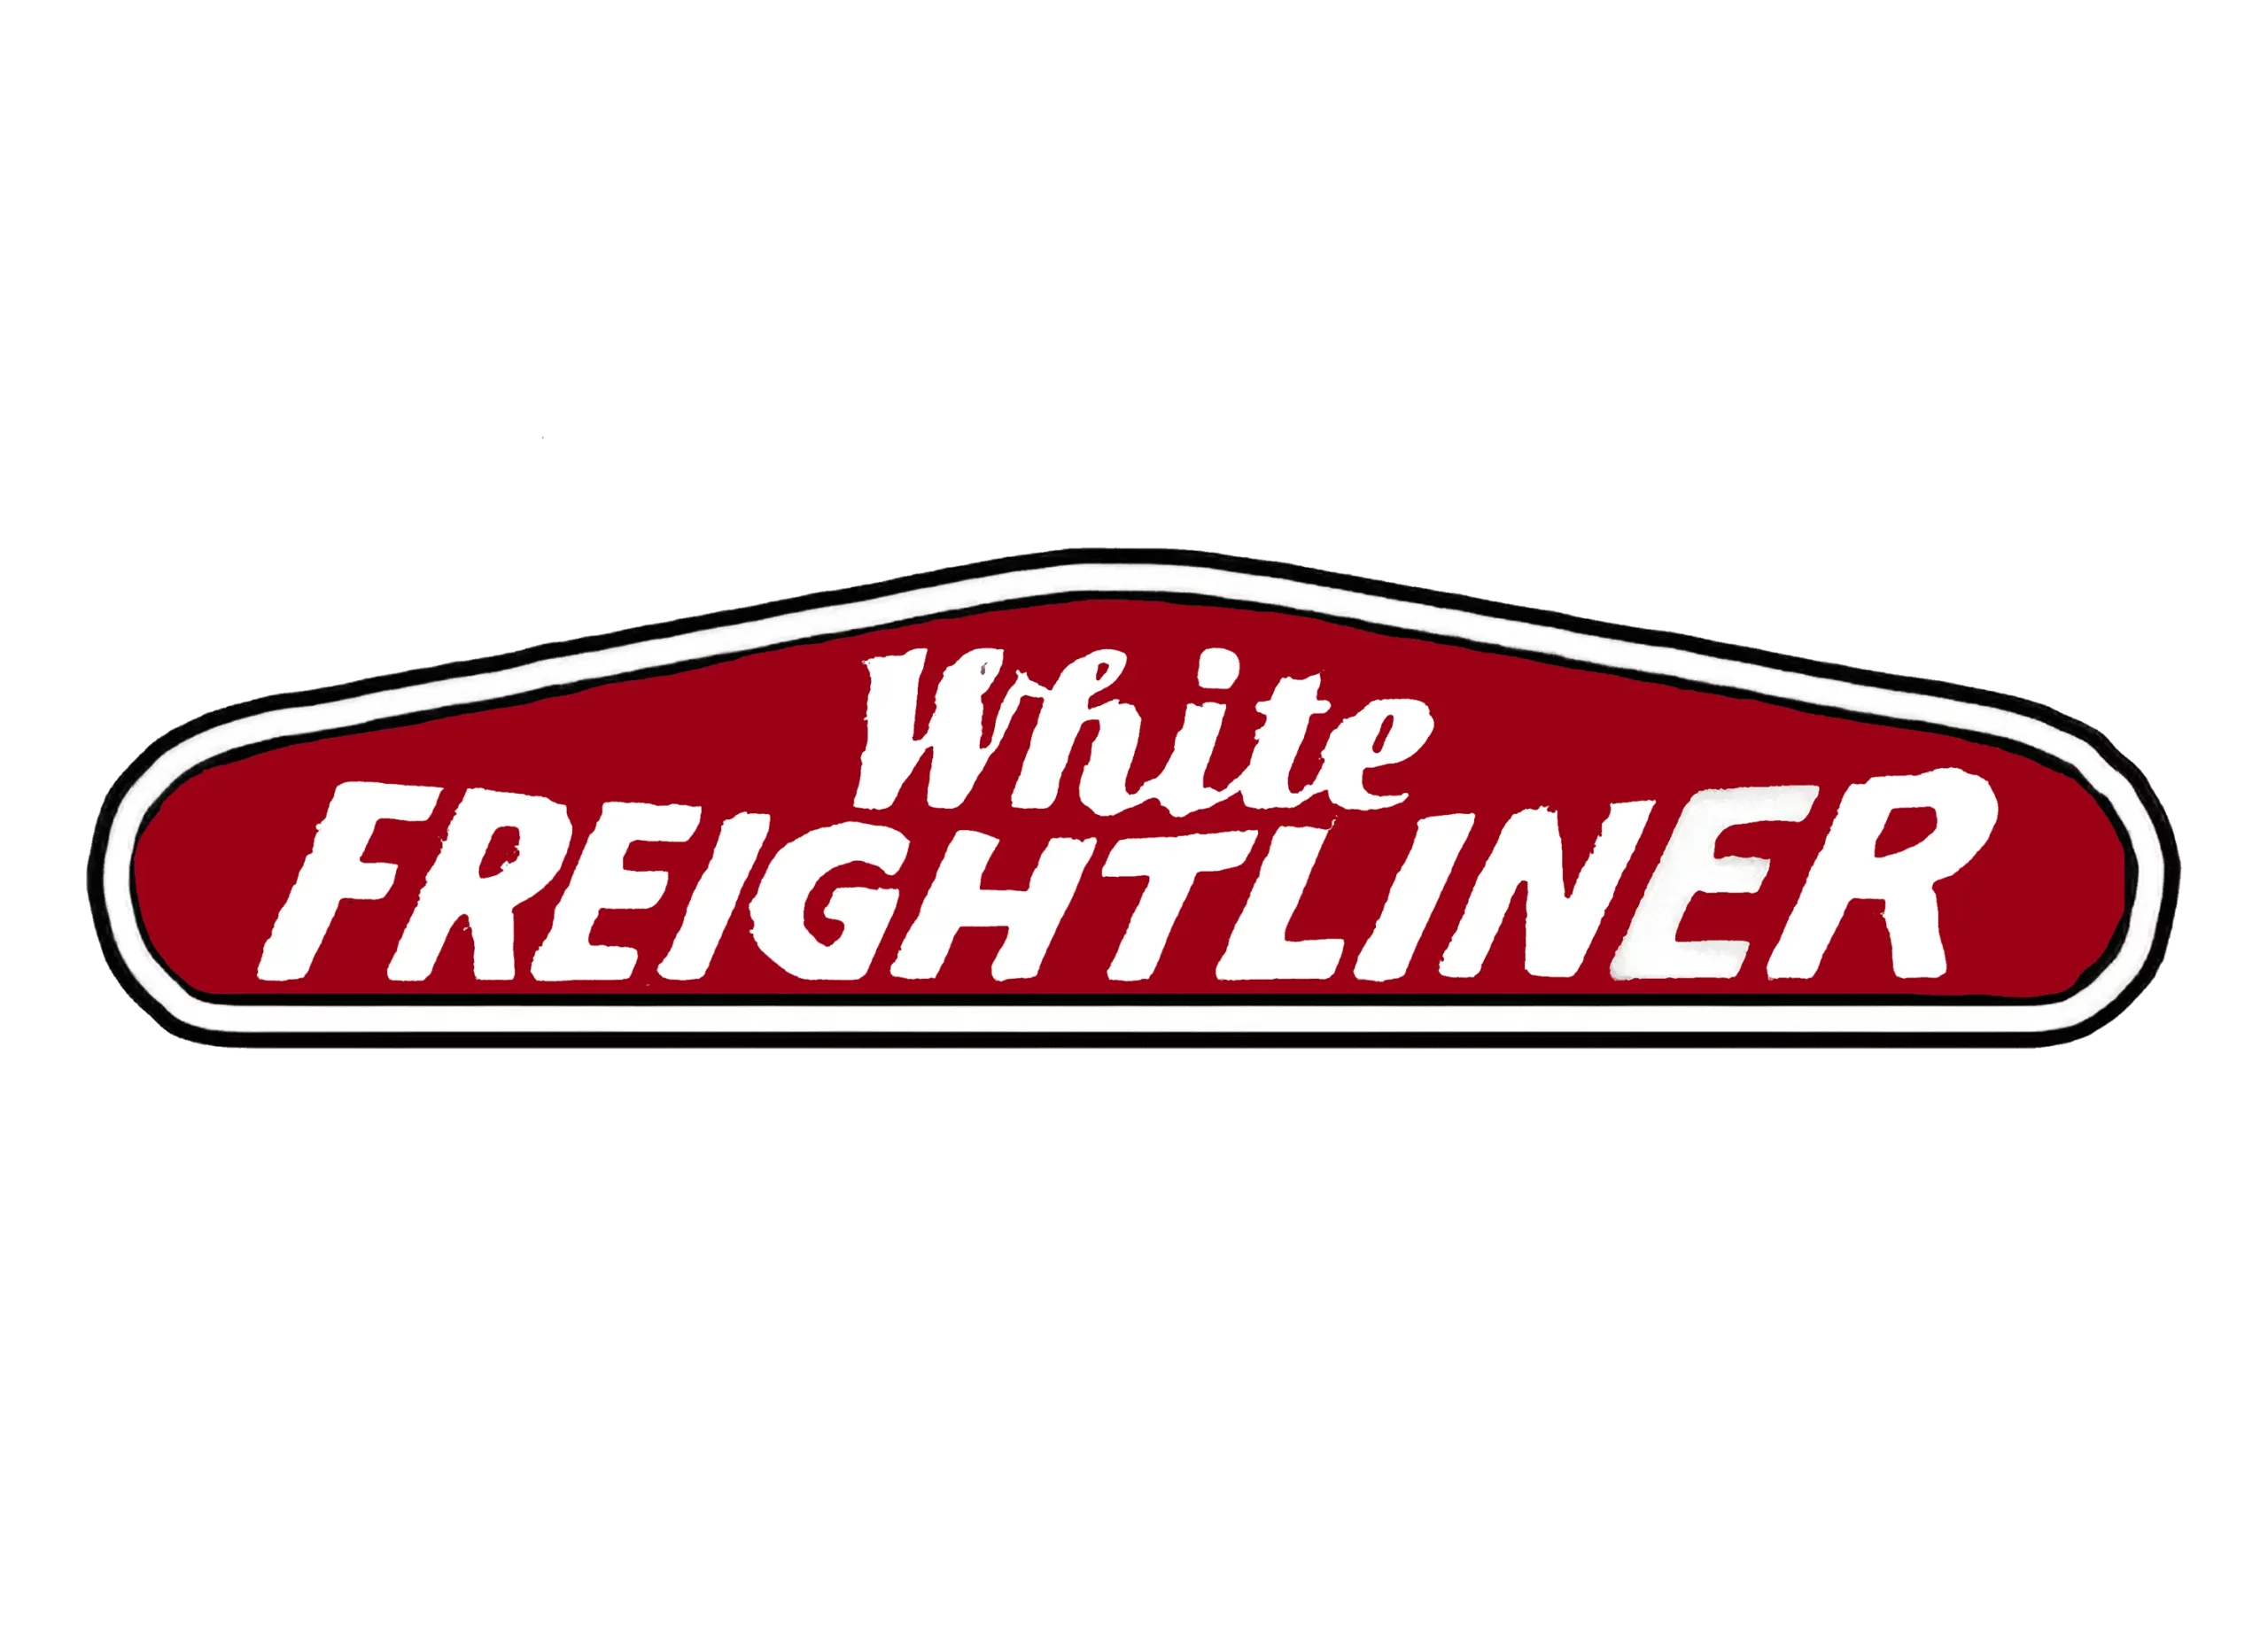 Freightliner logo 1951-1955